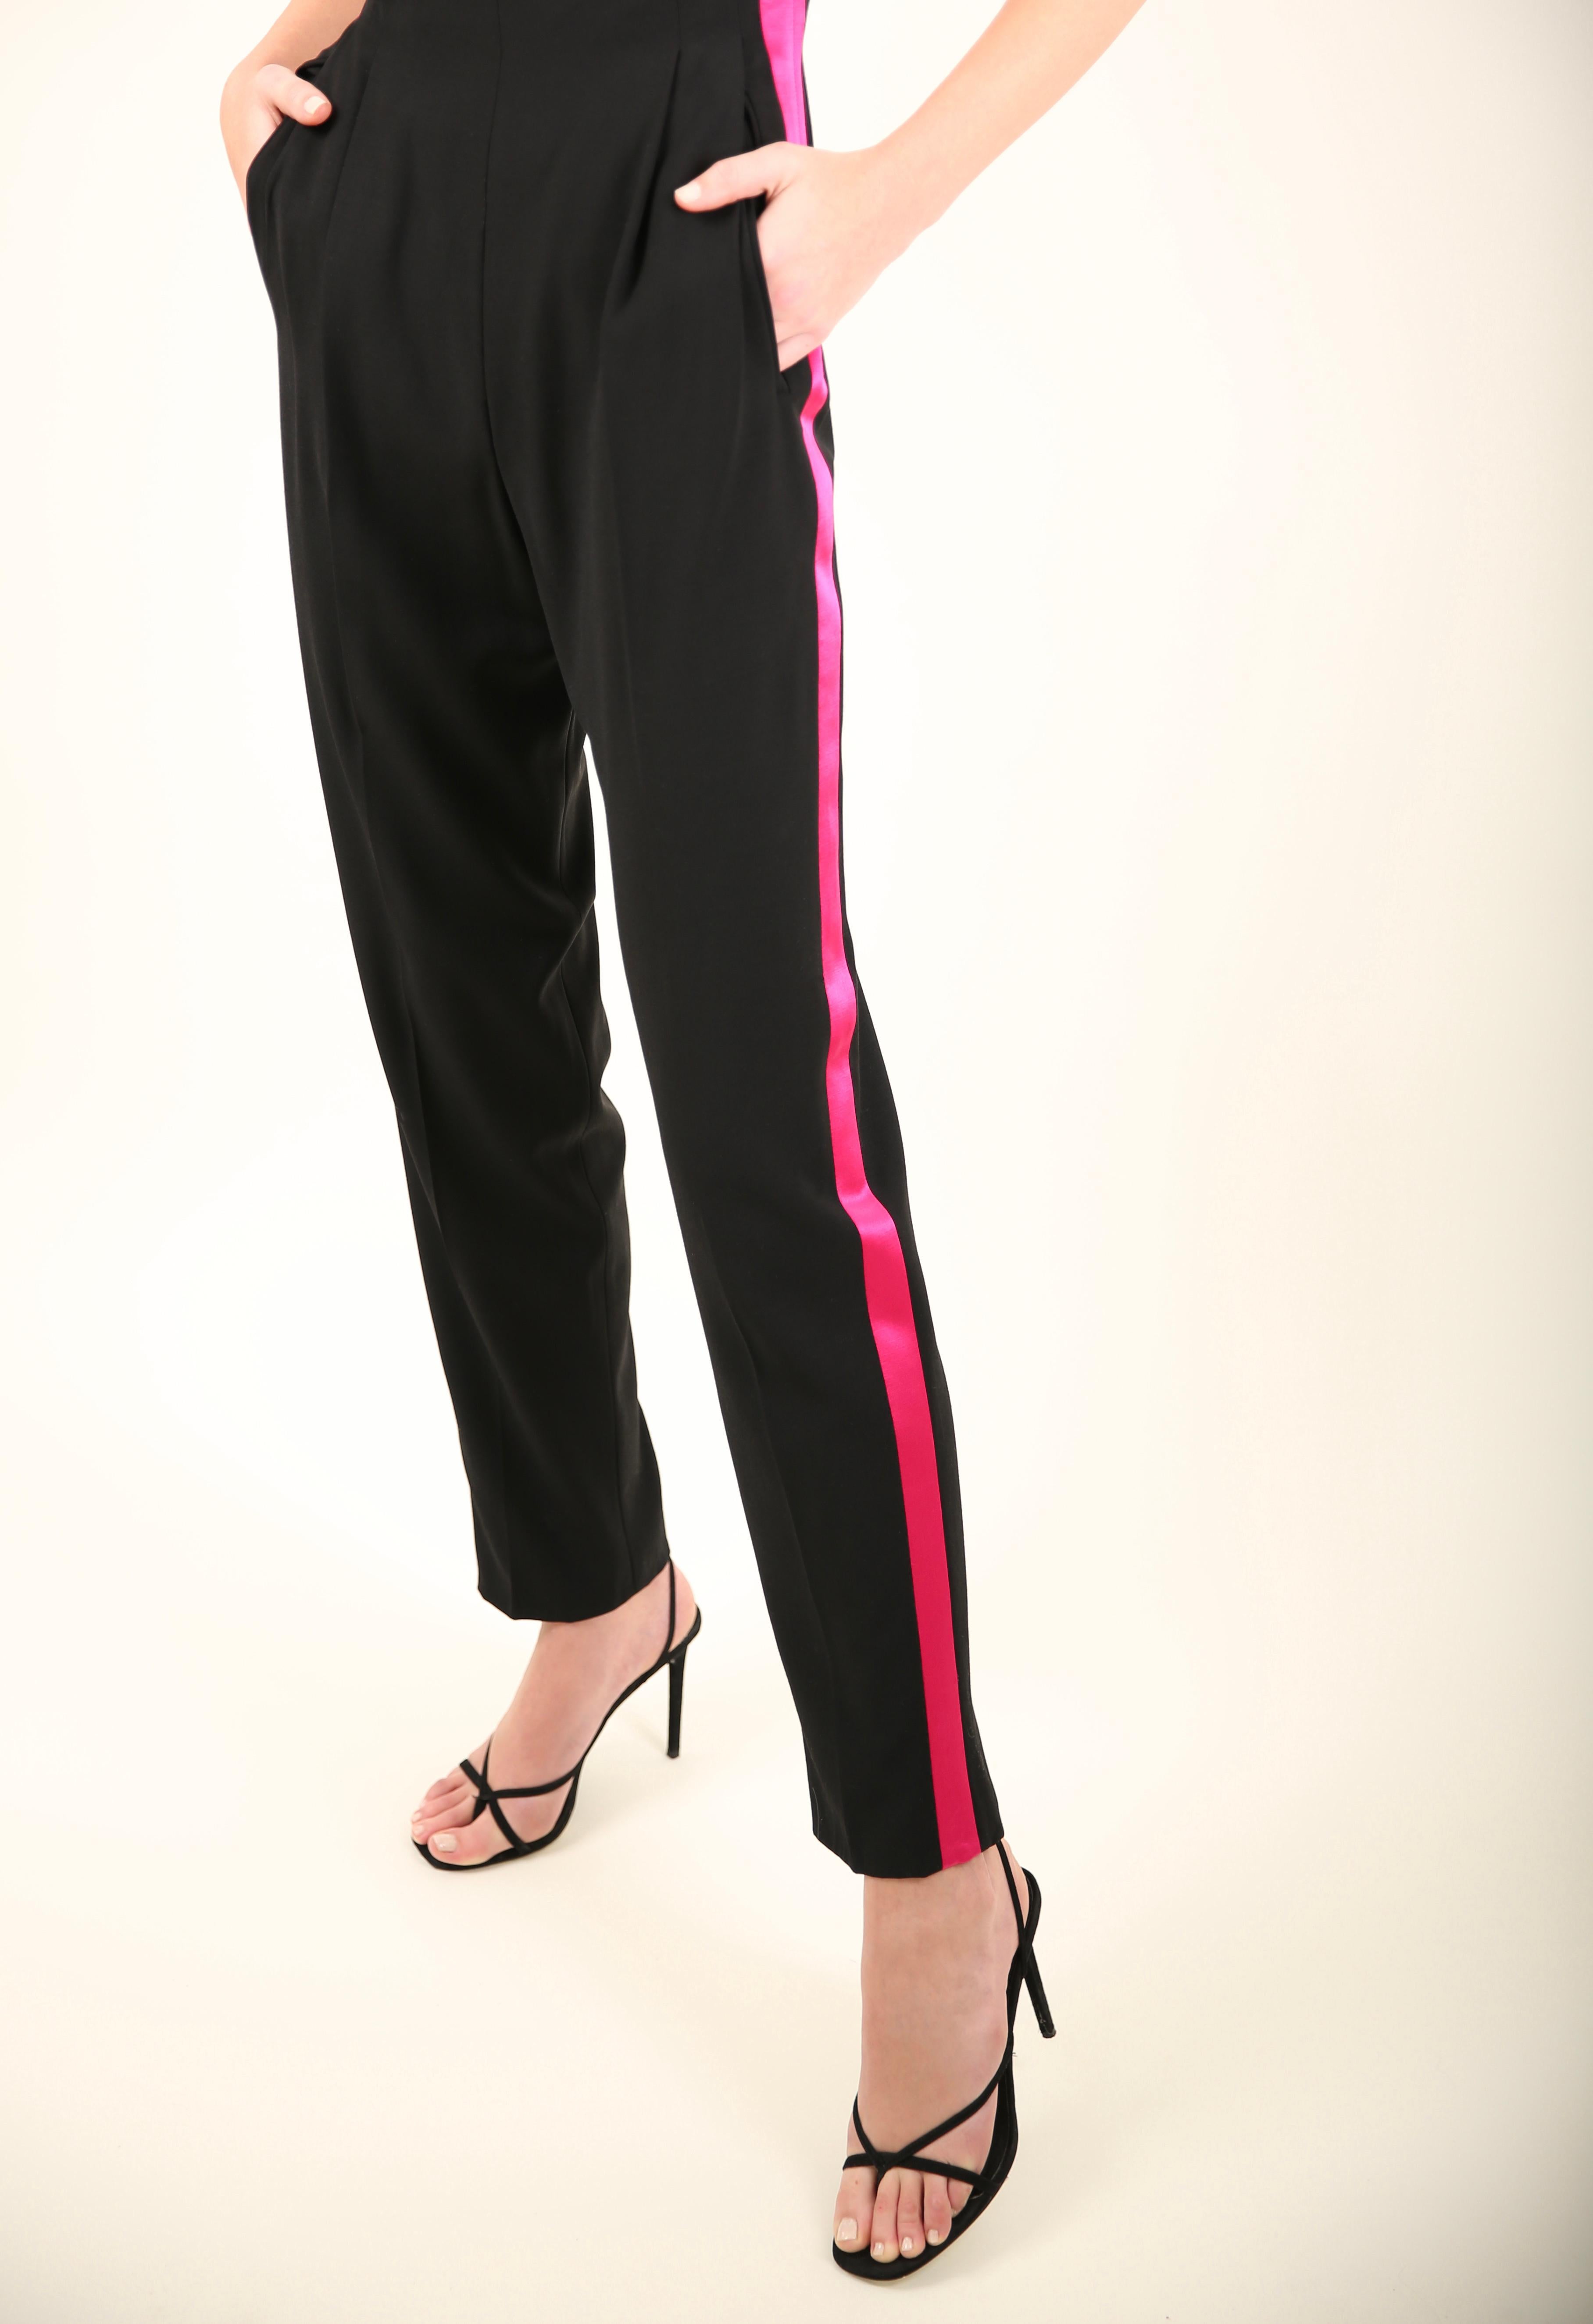 Gianfrano Ferre vtg black wool pink side satin stripe high waisted tuxedo pants  For Sale 1